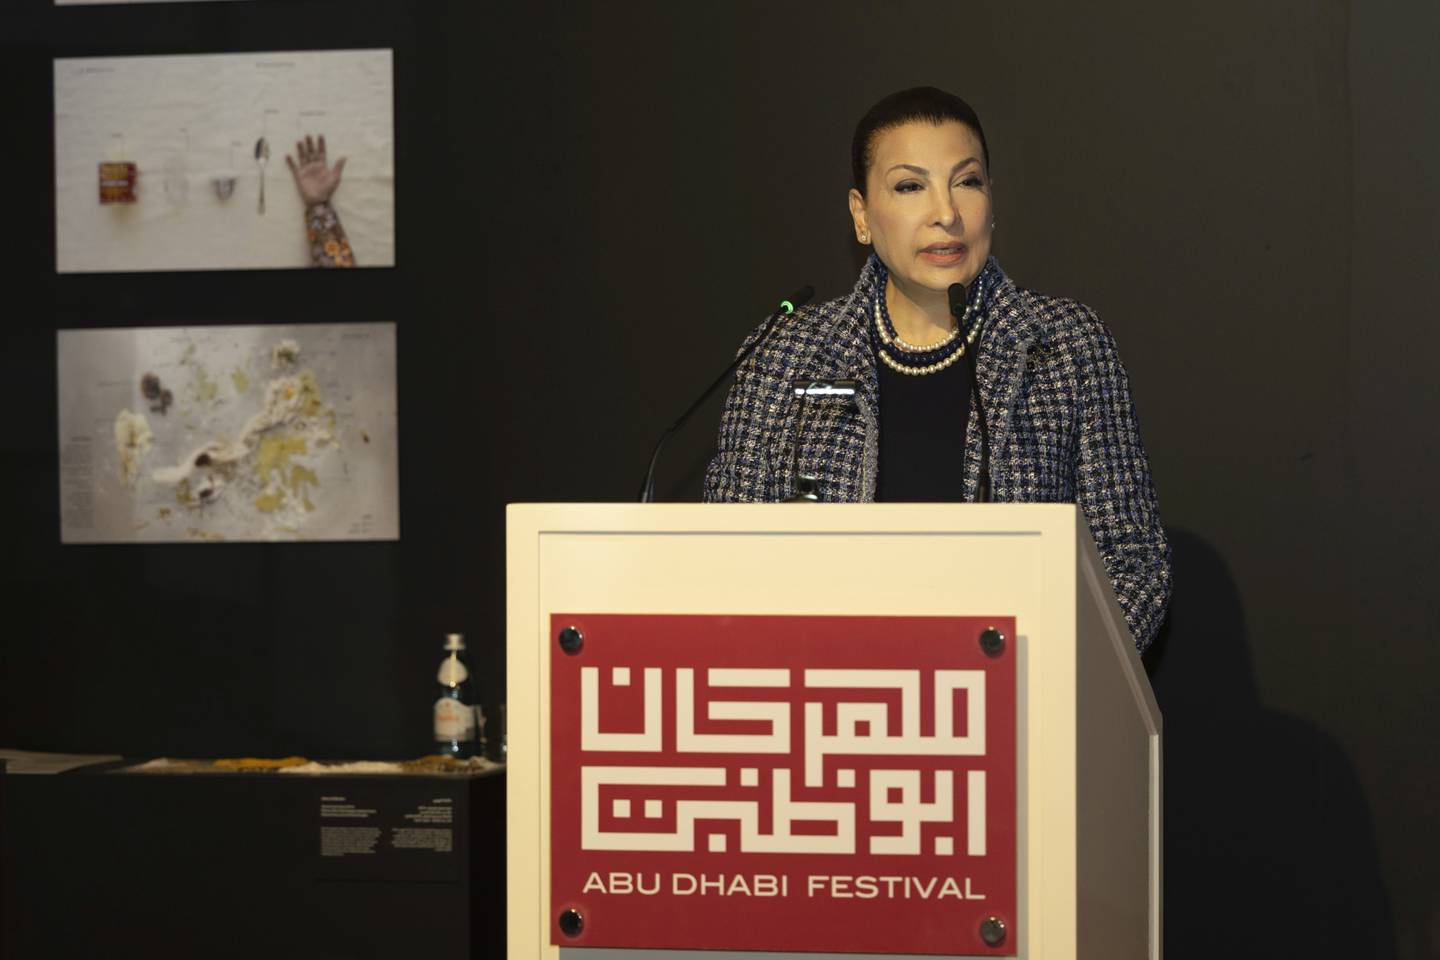 Huda Ibrahim Al Khamis, Founder of the Abu Dhabi Music and Arts Foundation and the artistic director of Abu Dhabi Festival. Photo: Admaf